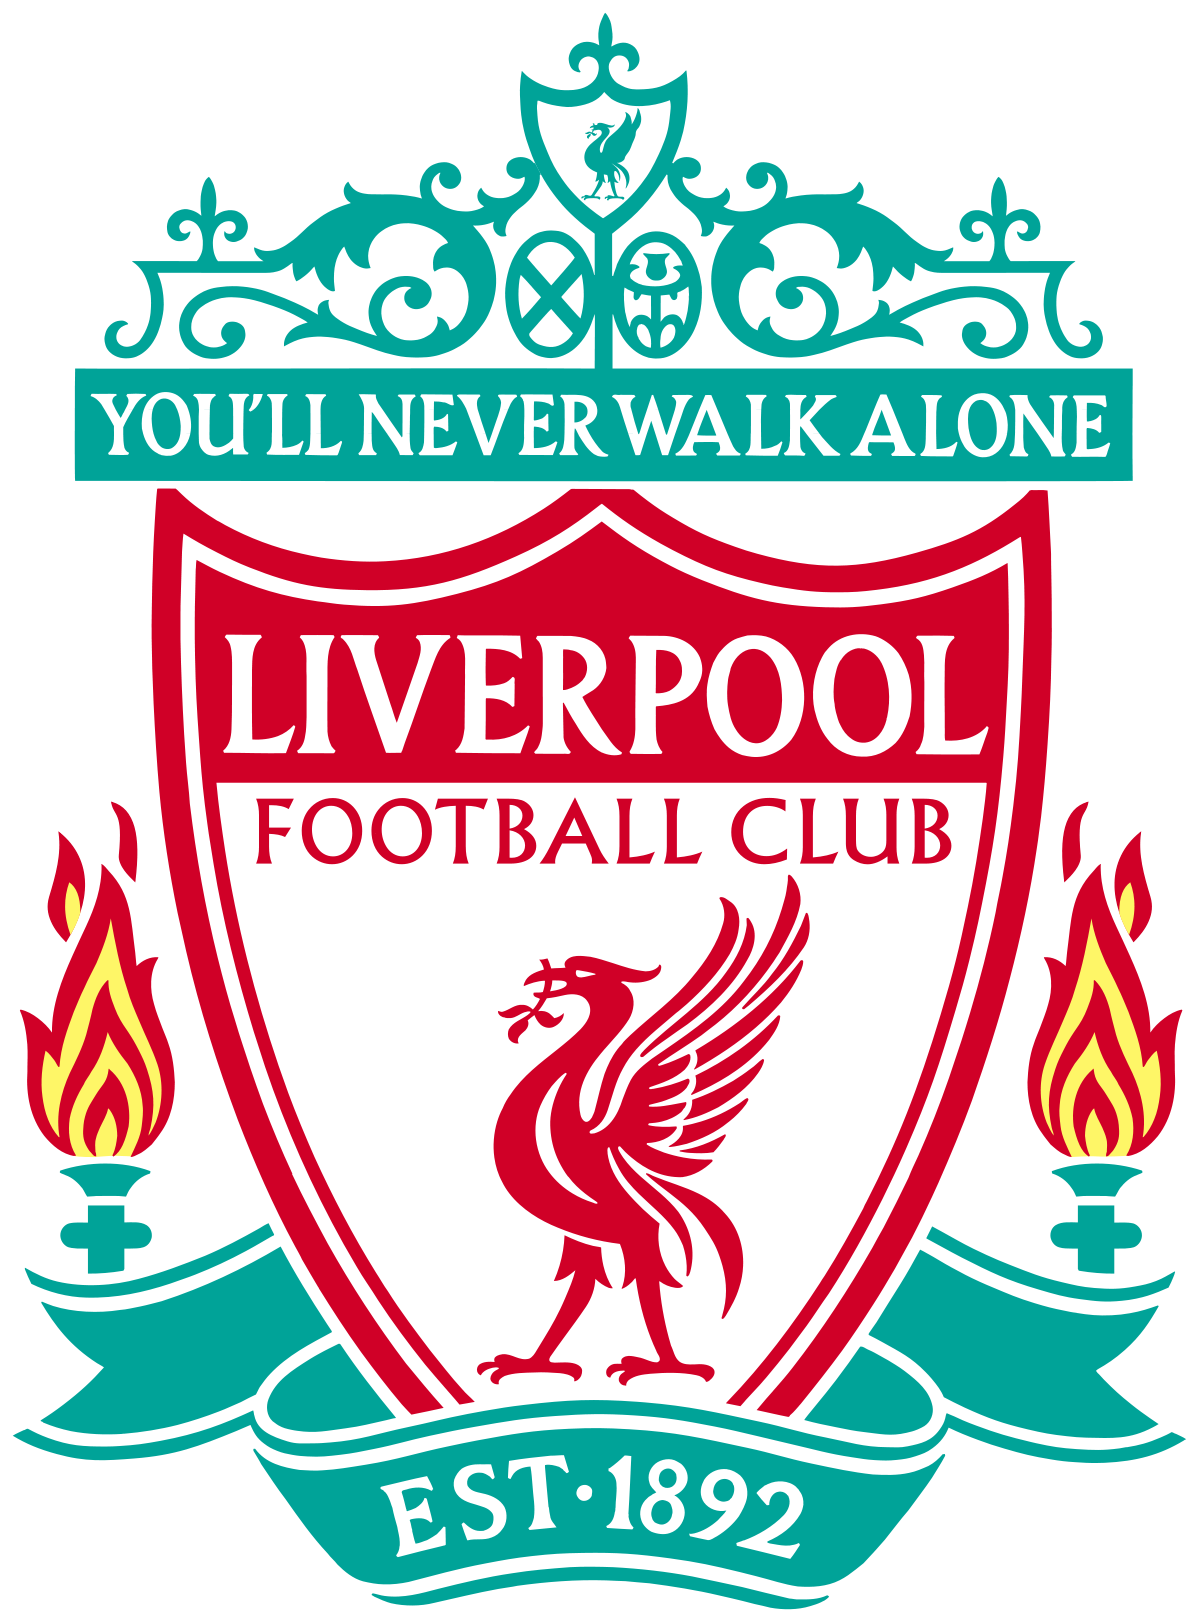 Klub Liverpool